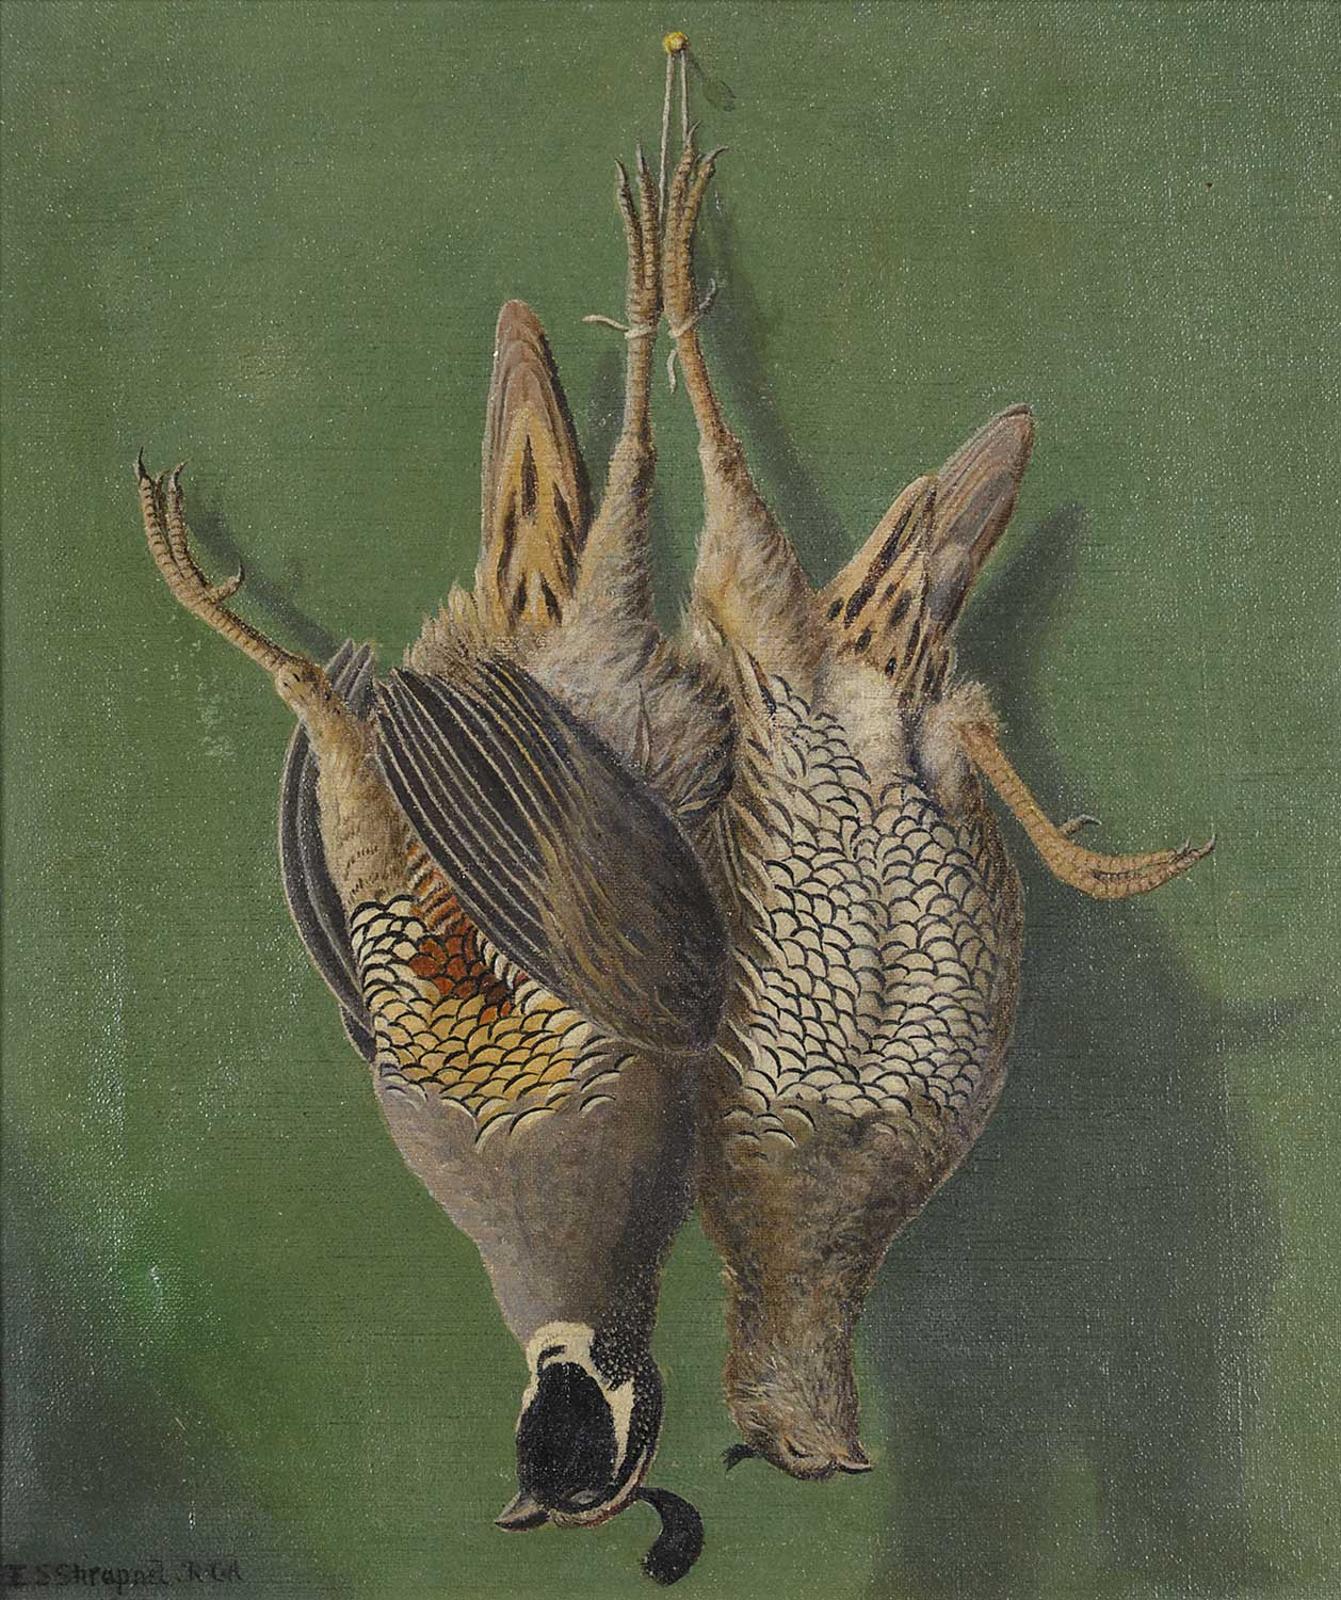 Edward Scrope Shrapnel (1847-1920) - Untitled - Male and Female Quail